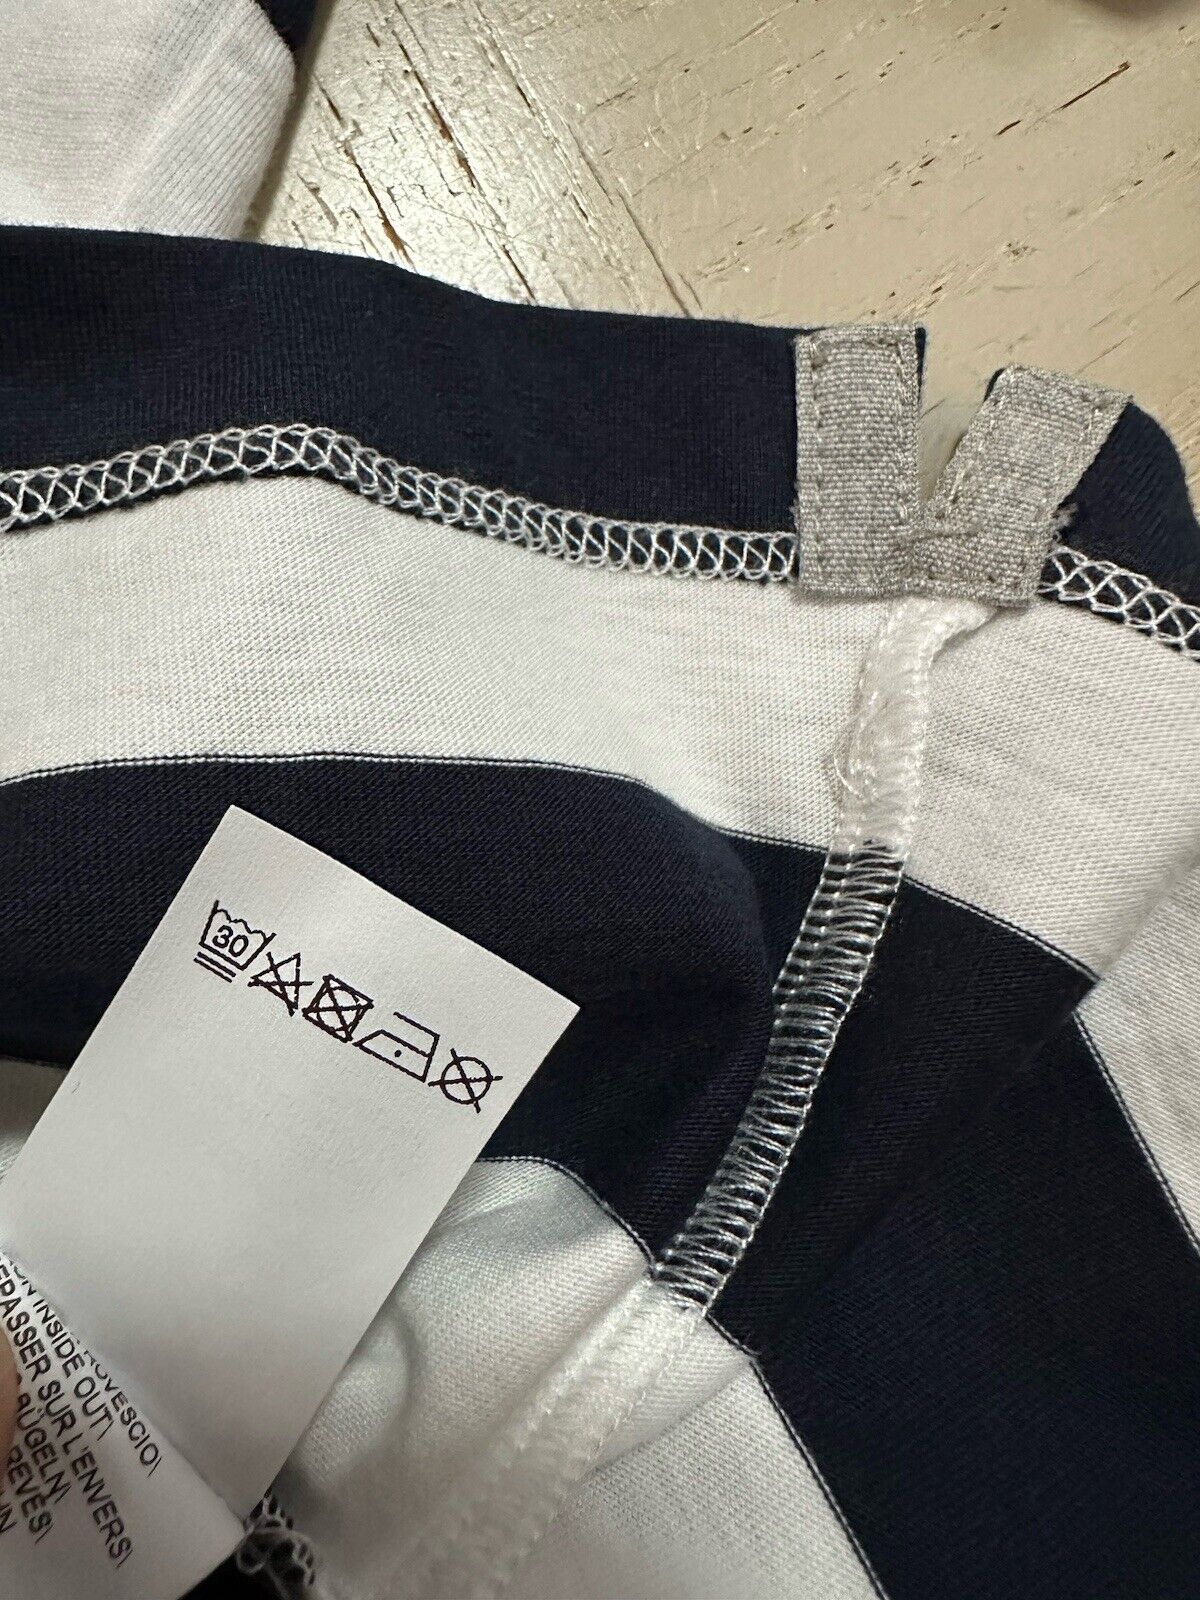 New $730 Brunello Cucinelli Men Striped Slim Fit Polo Shirt Navy/White Size S